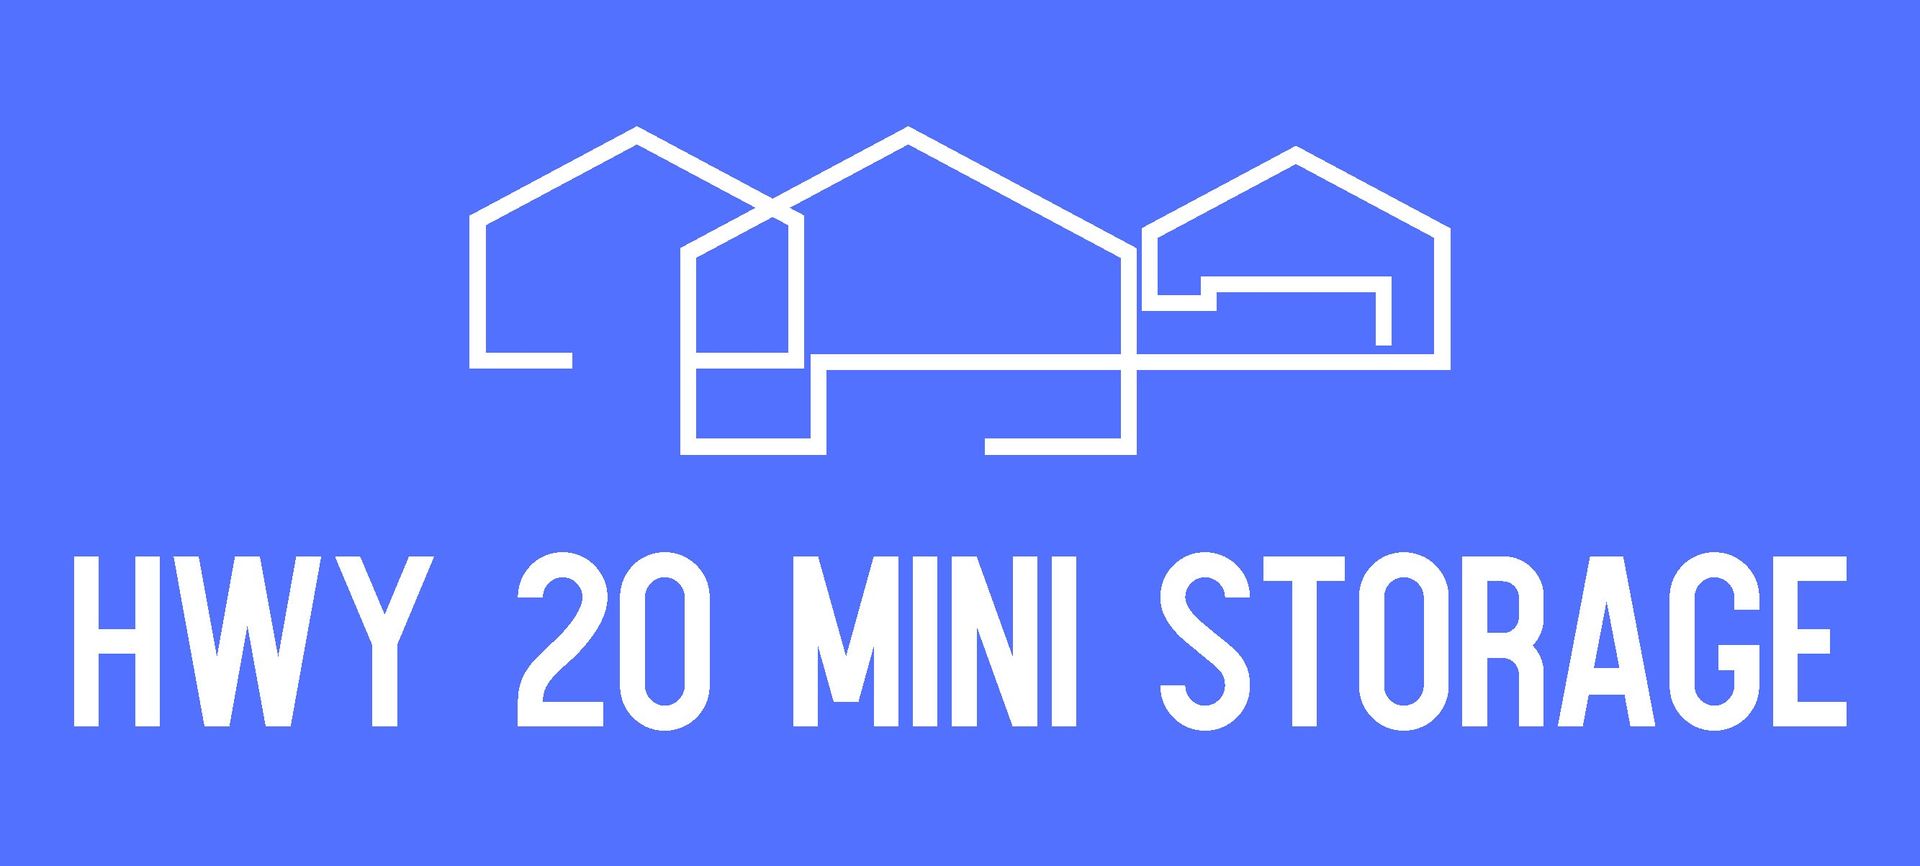 Hwy 20 Mini Storage - Logo